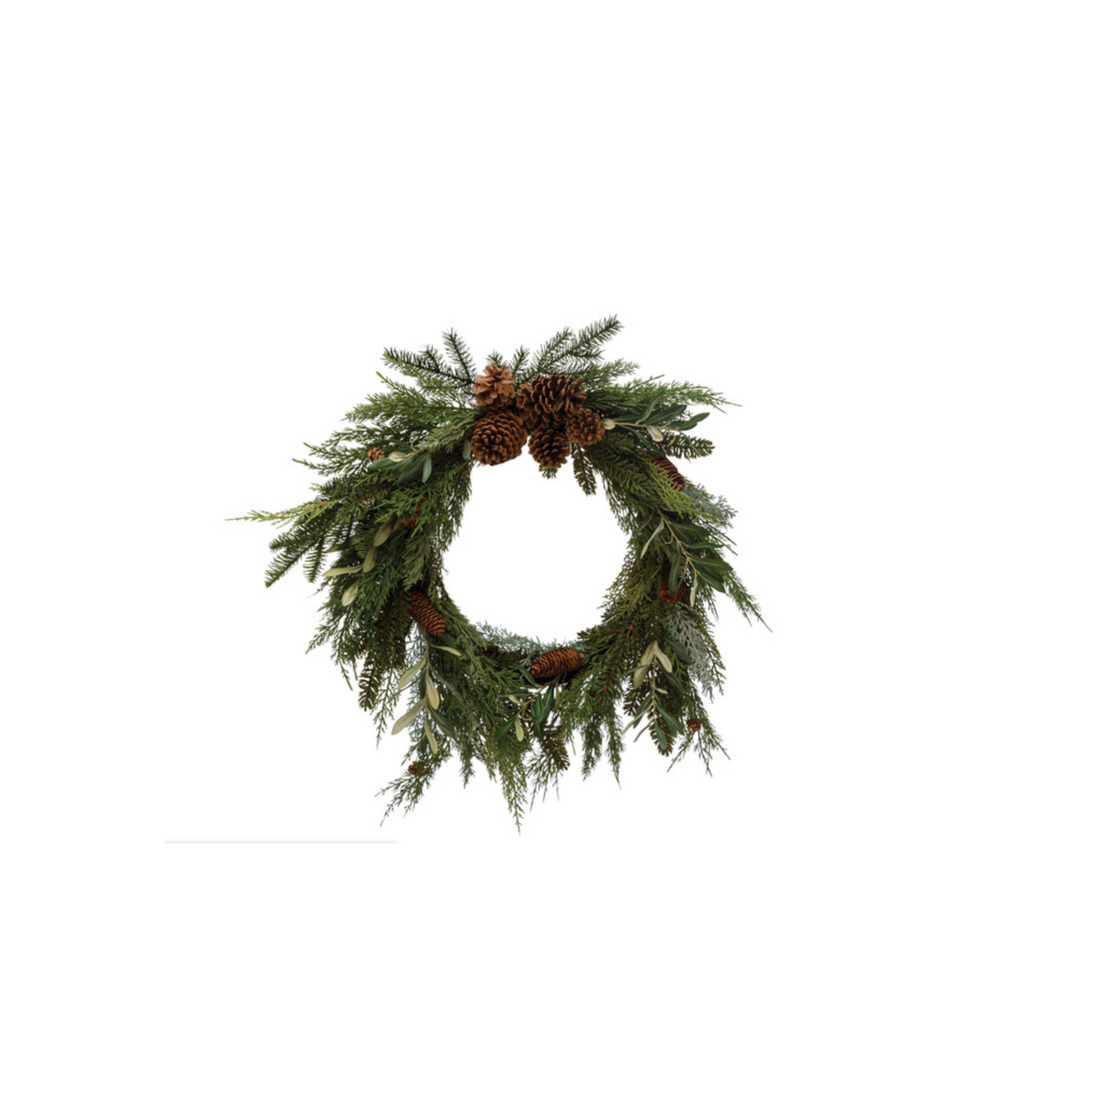 Mixed Pine Wreath 26"